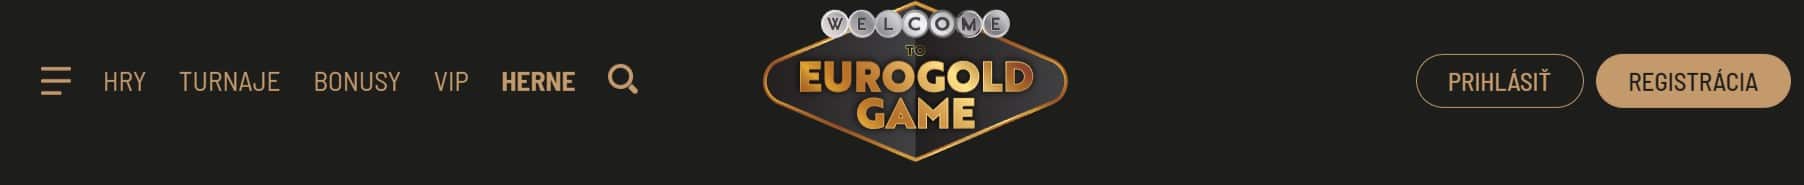 EUROGOLD zakaznicka podpora navod ako kontaktovat podporu kasina EUROGOLD GAME